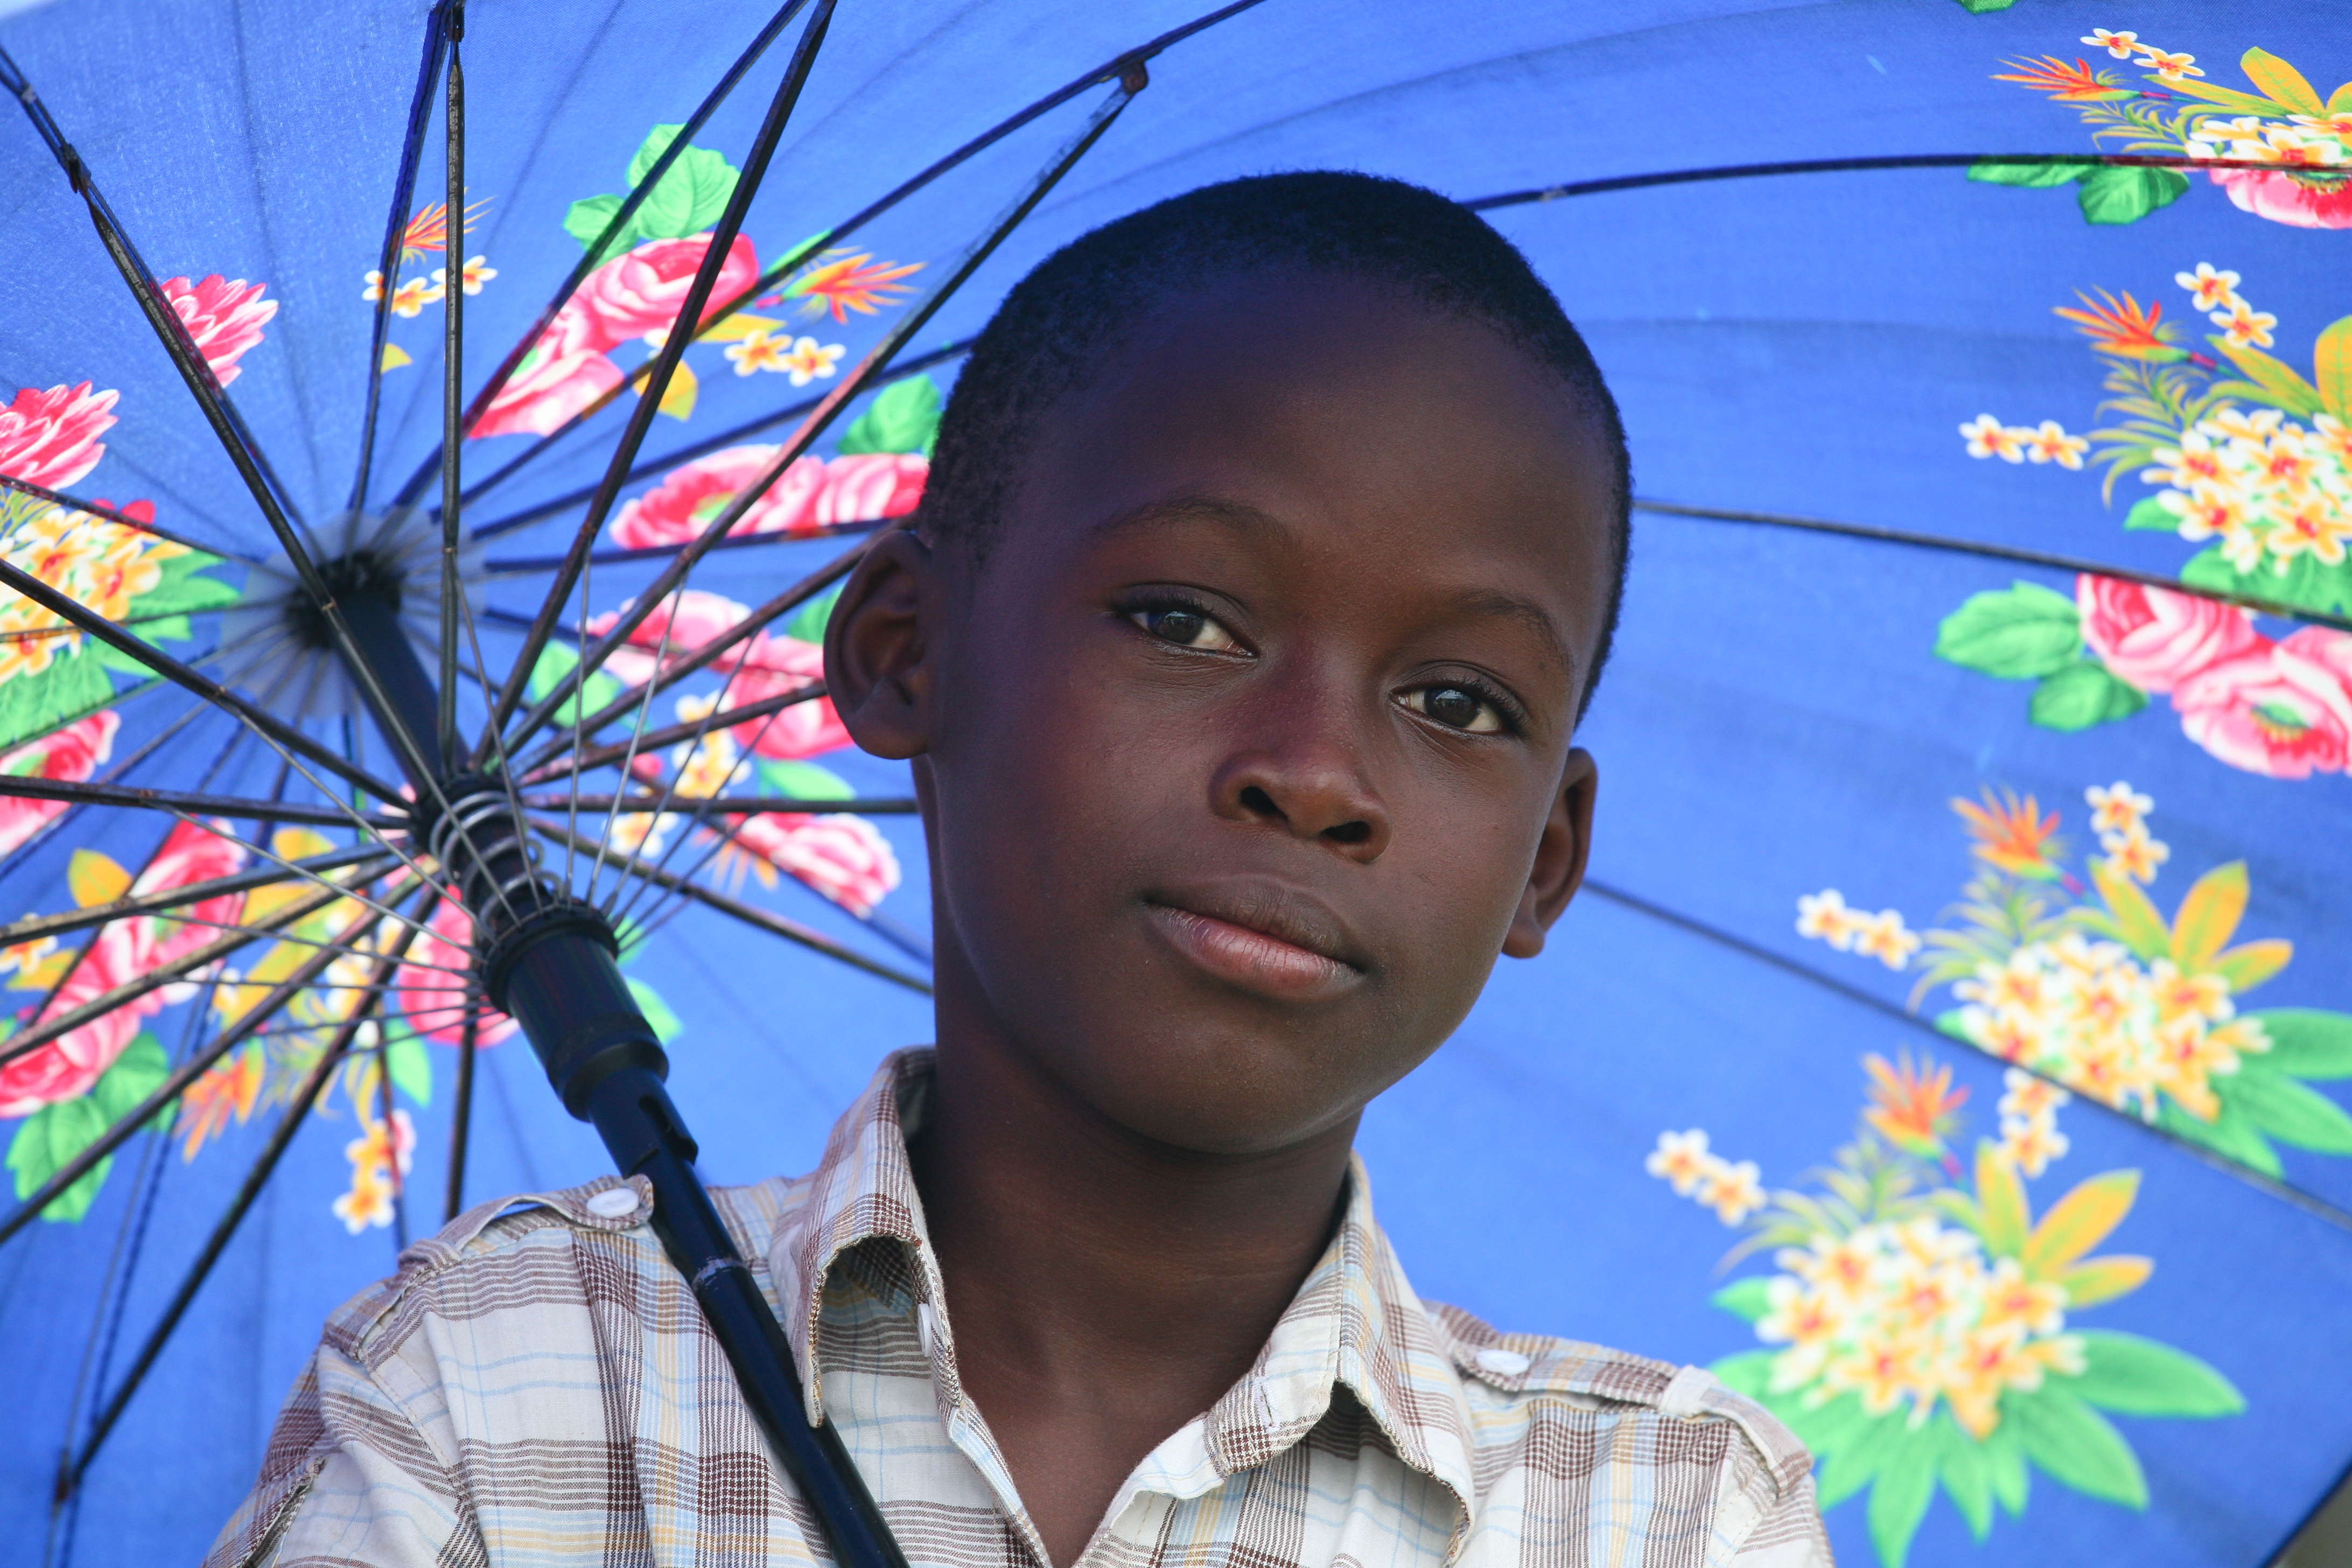 Haitian boy with umbrella (8582261222)